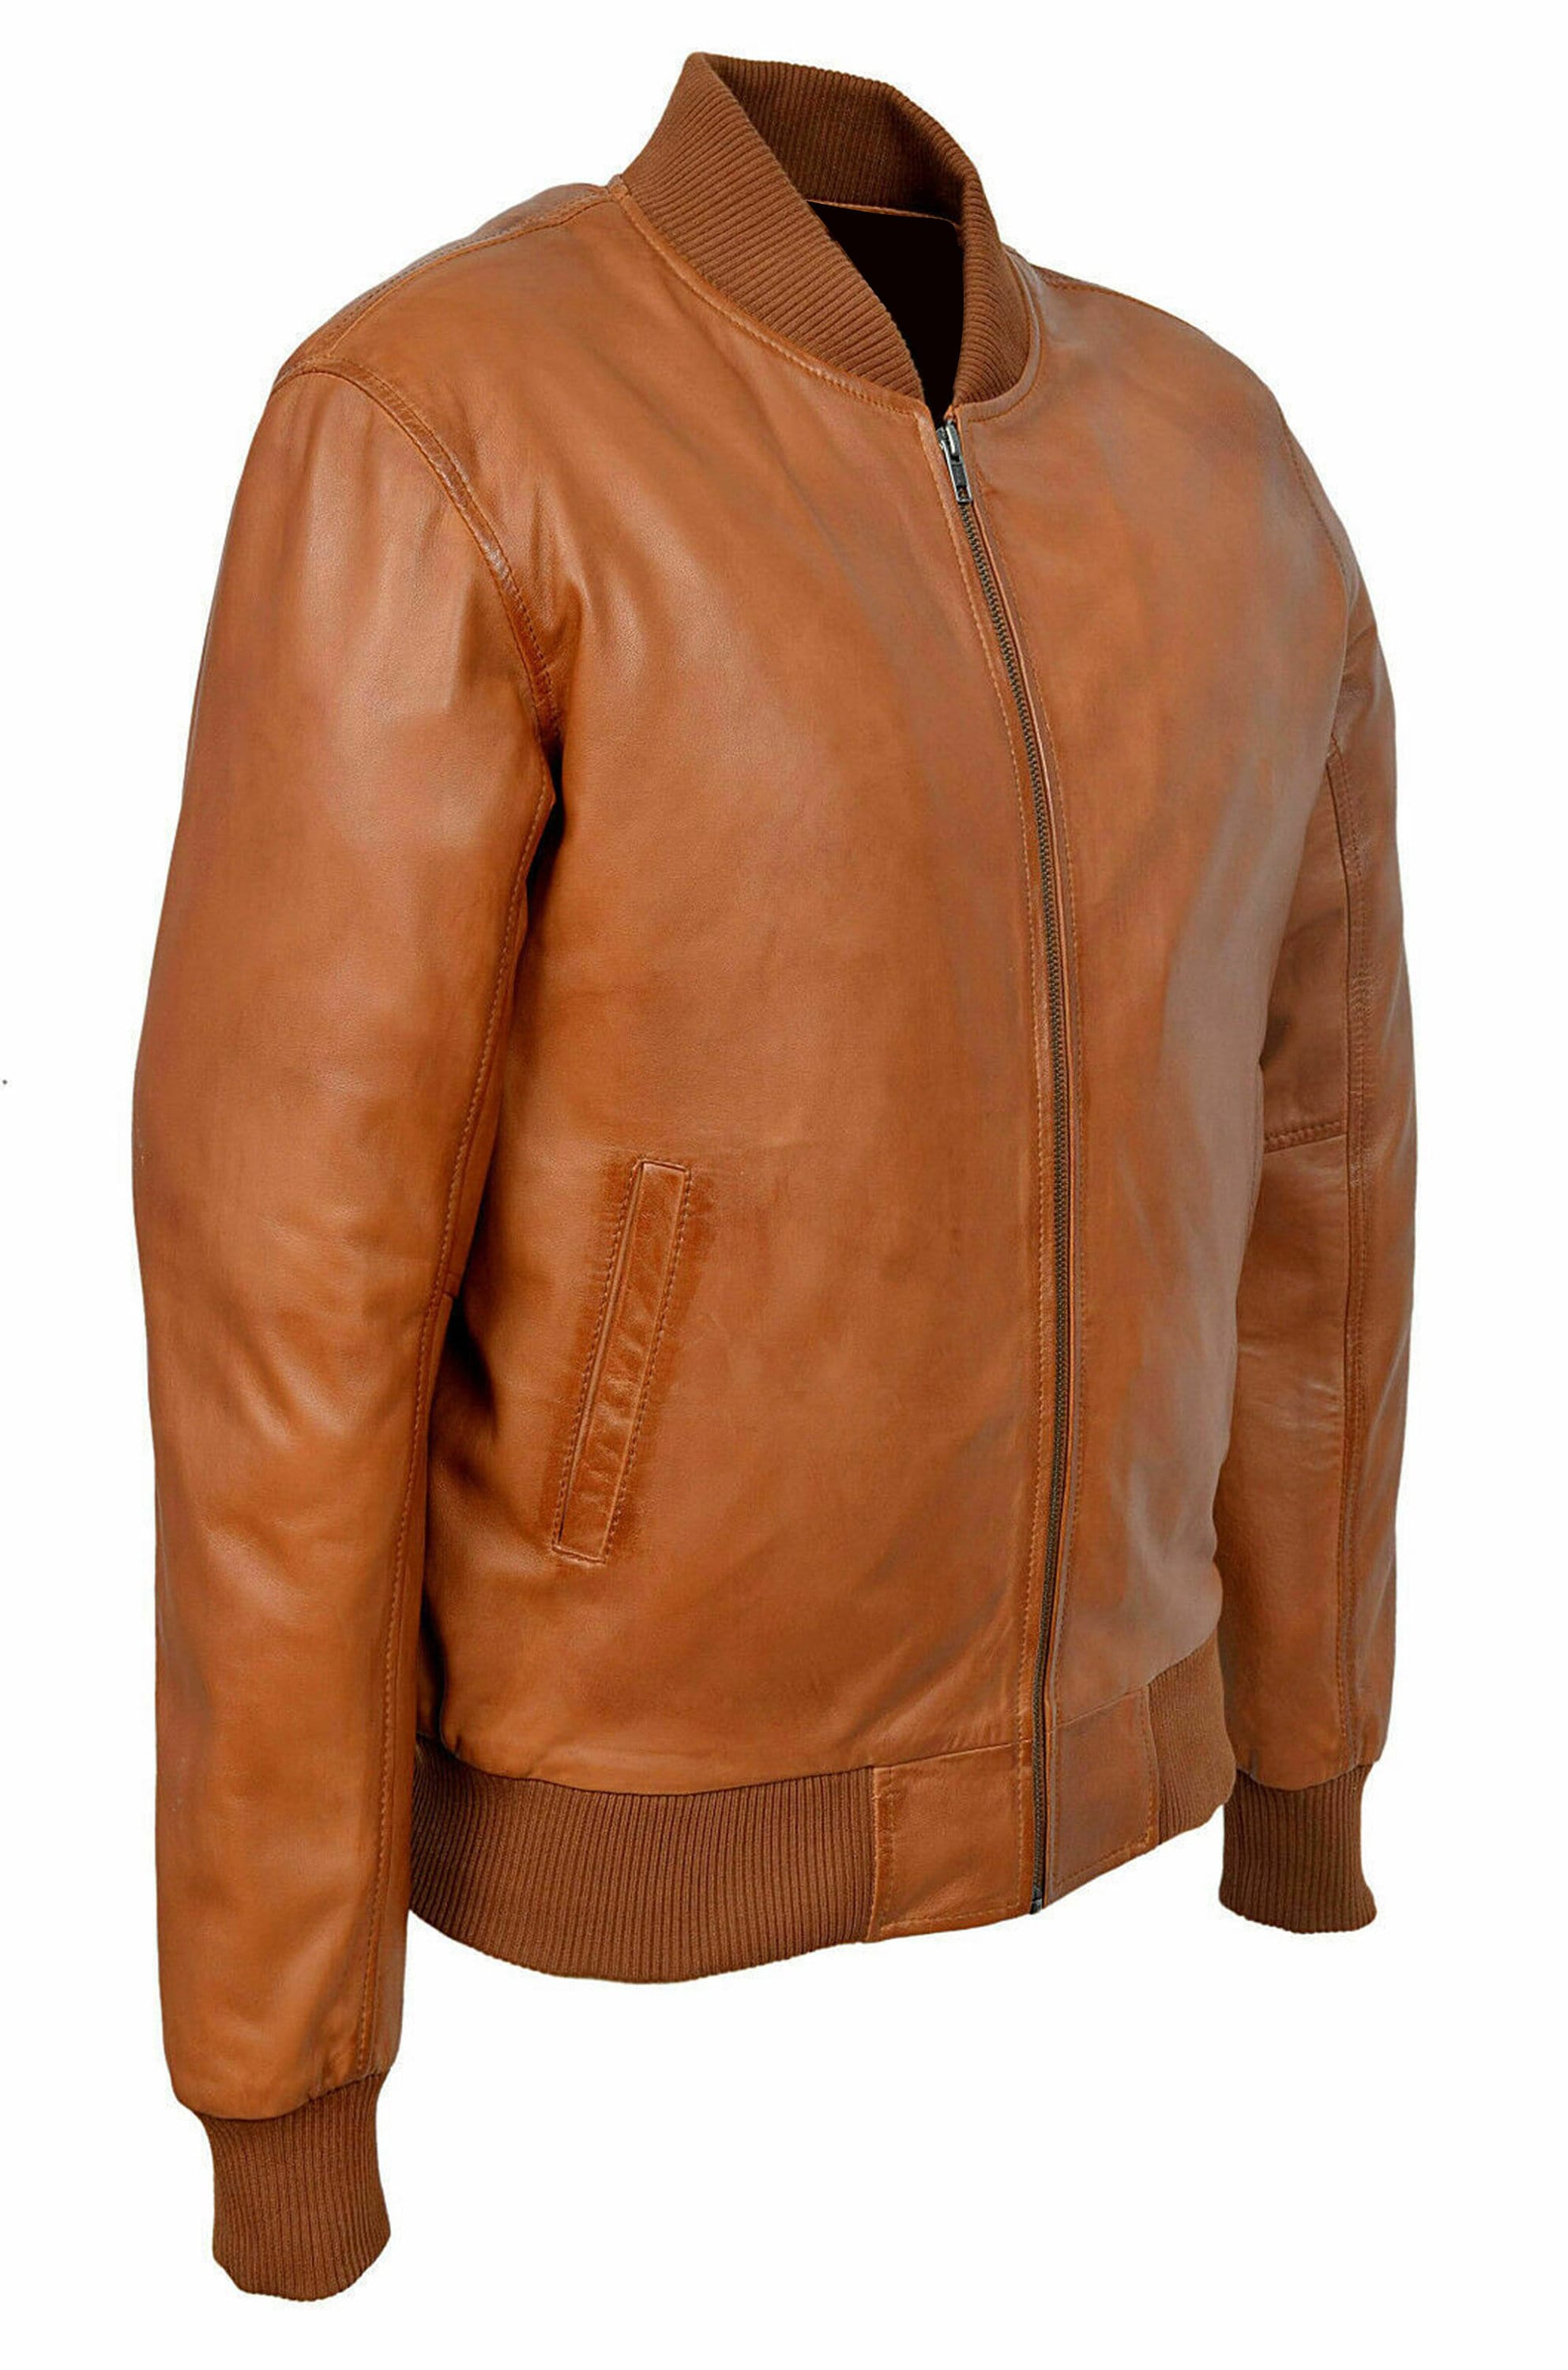 Men's Tan Wax Leather Jacket Bomber Jacket